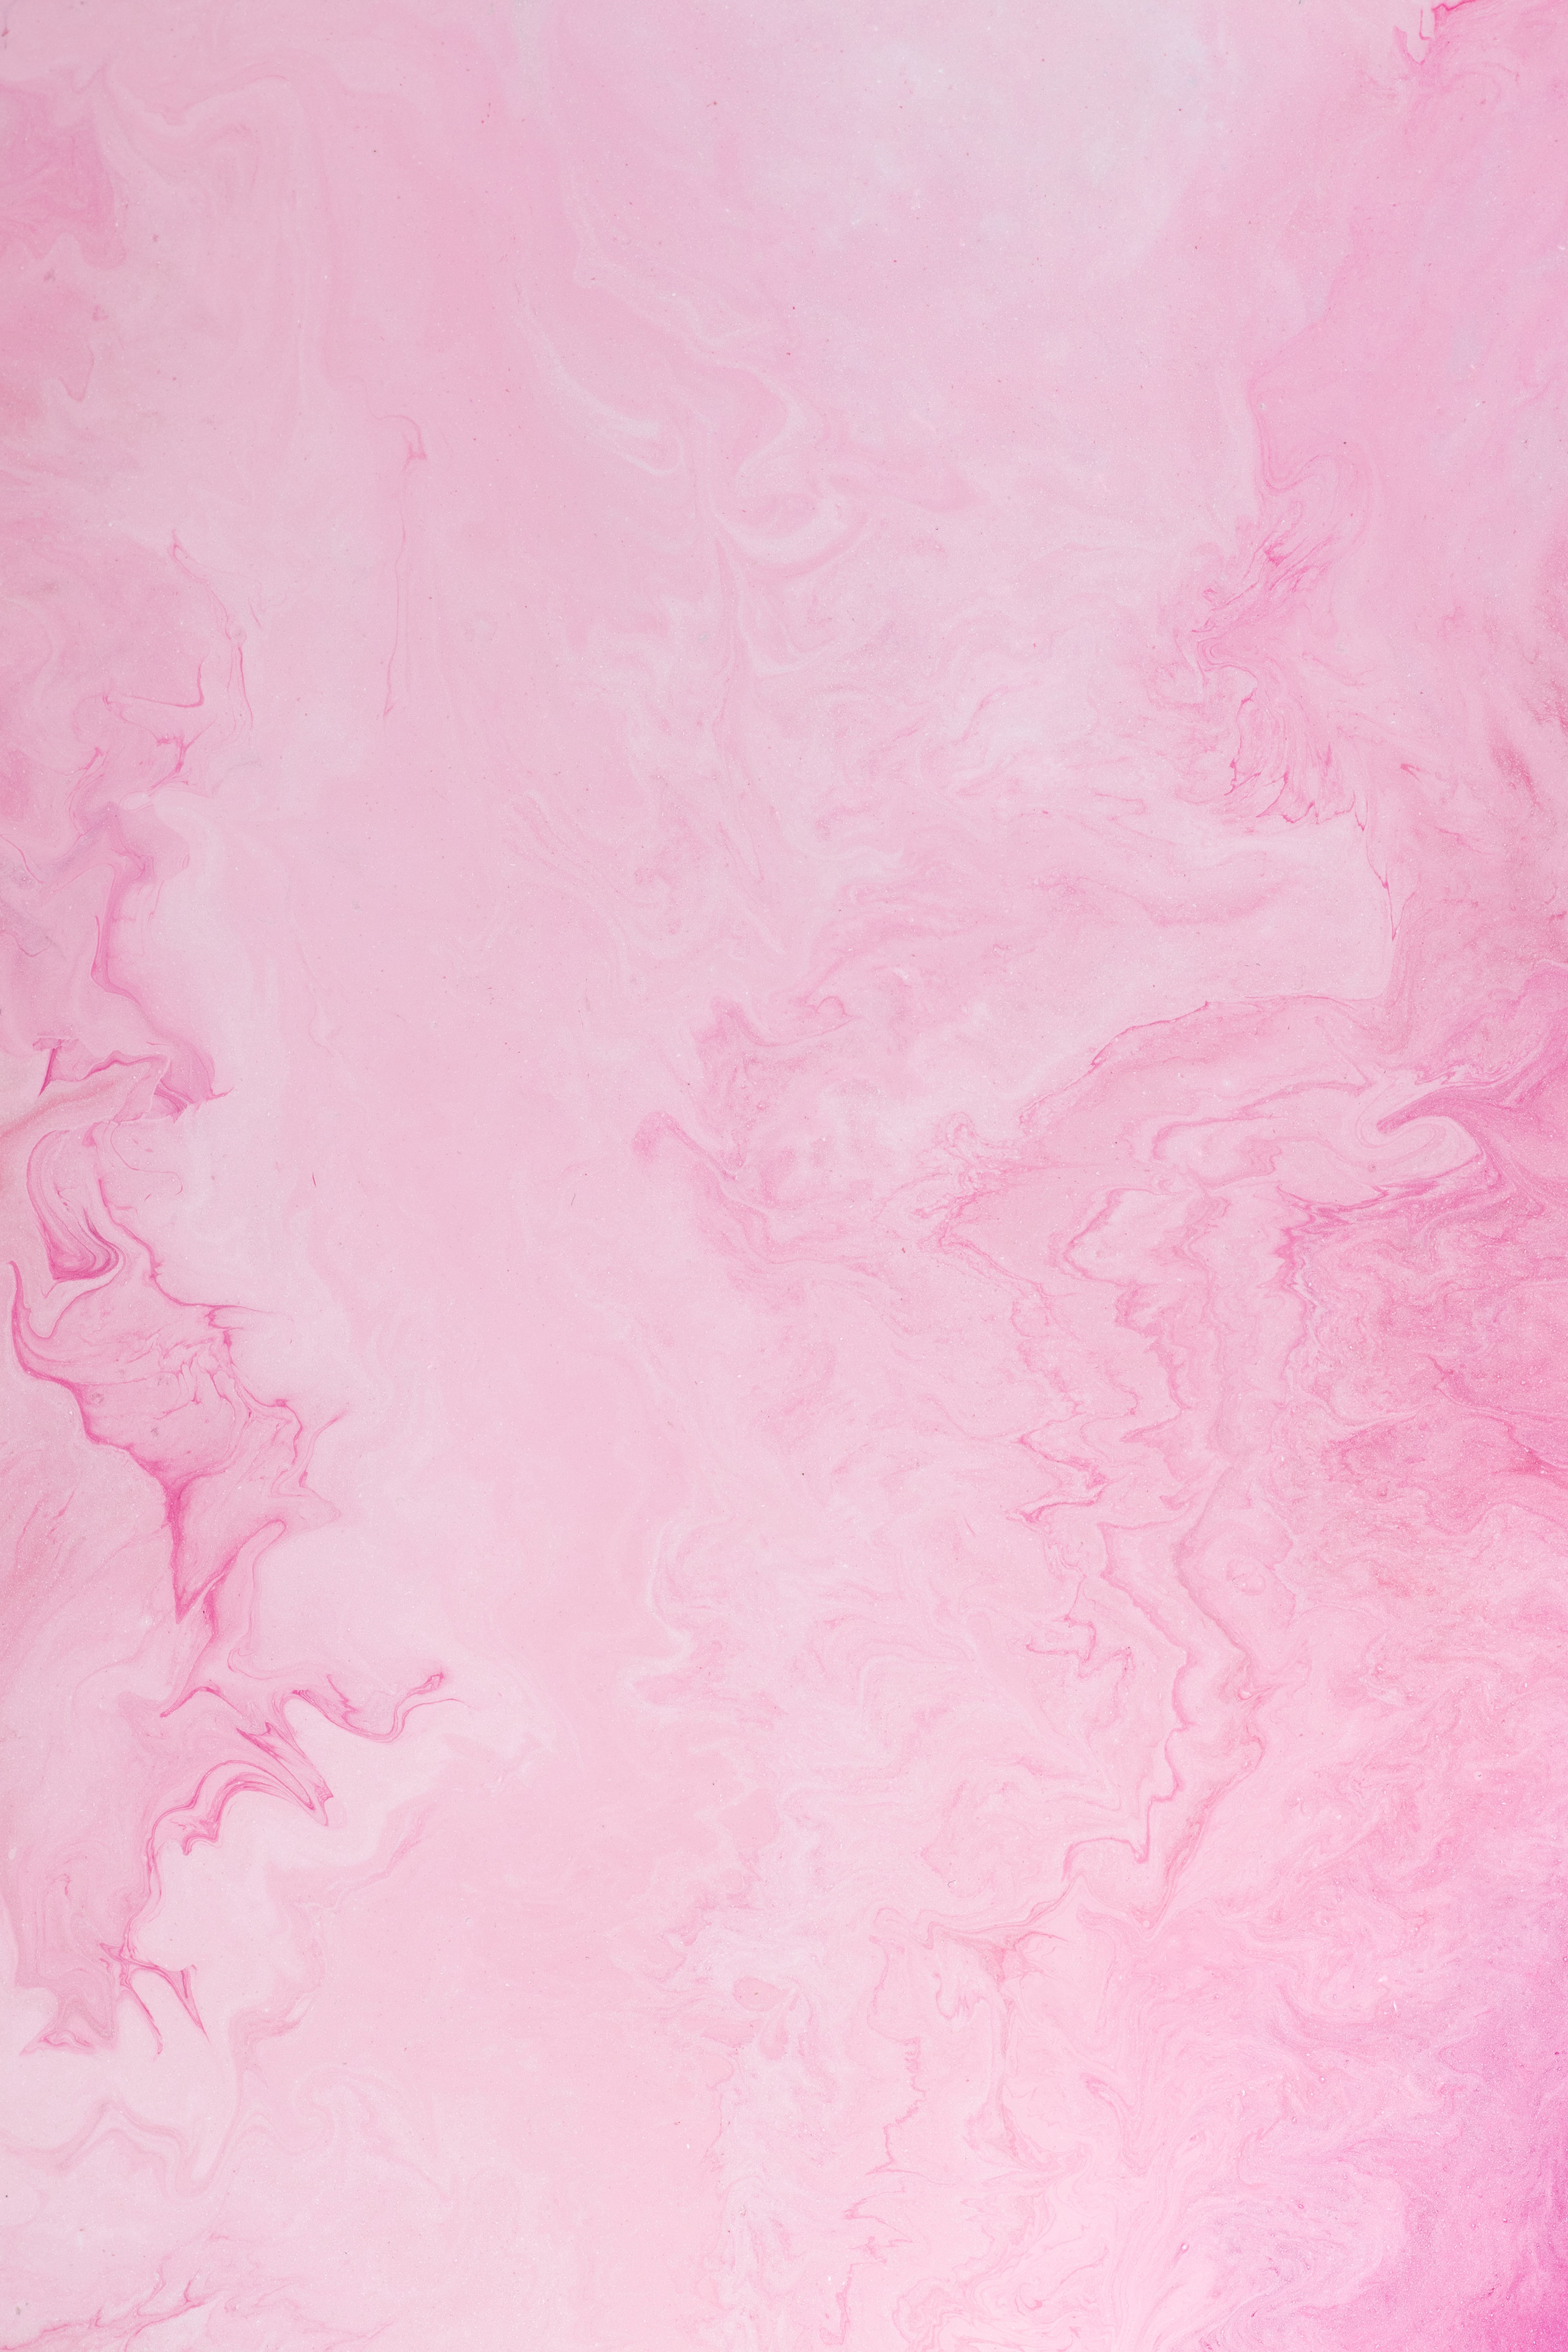 126521 baixar imagens cor de rosa, abstrato, rosa, divórcios, textura, líquido - papéis de parede e protetores de tela gratuitamente